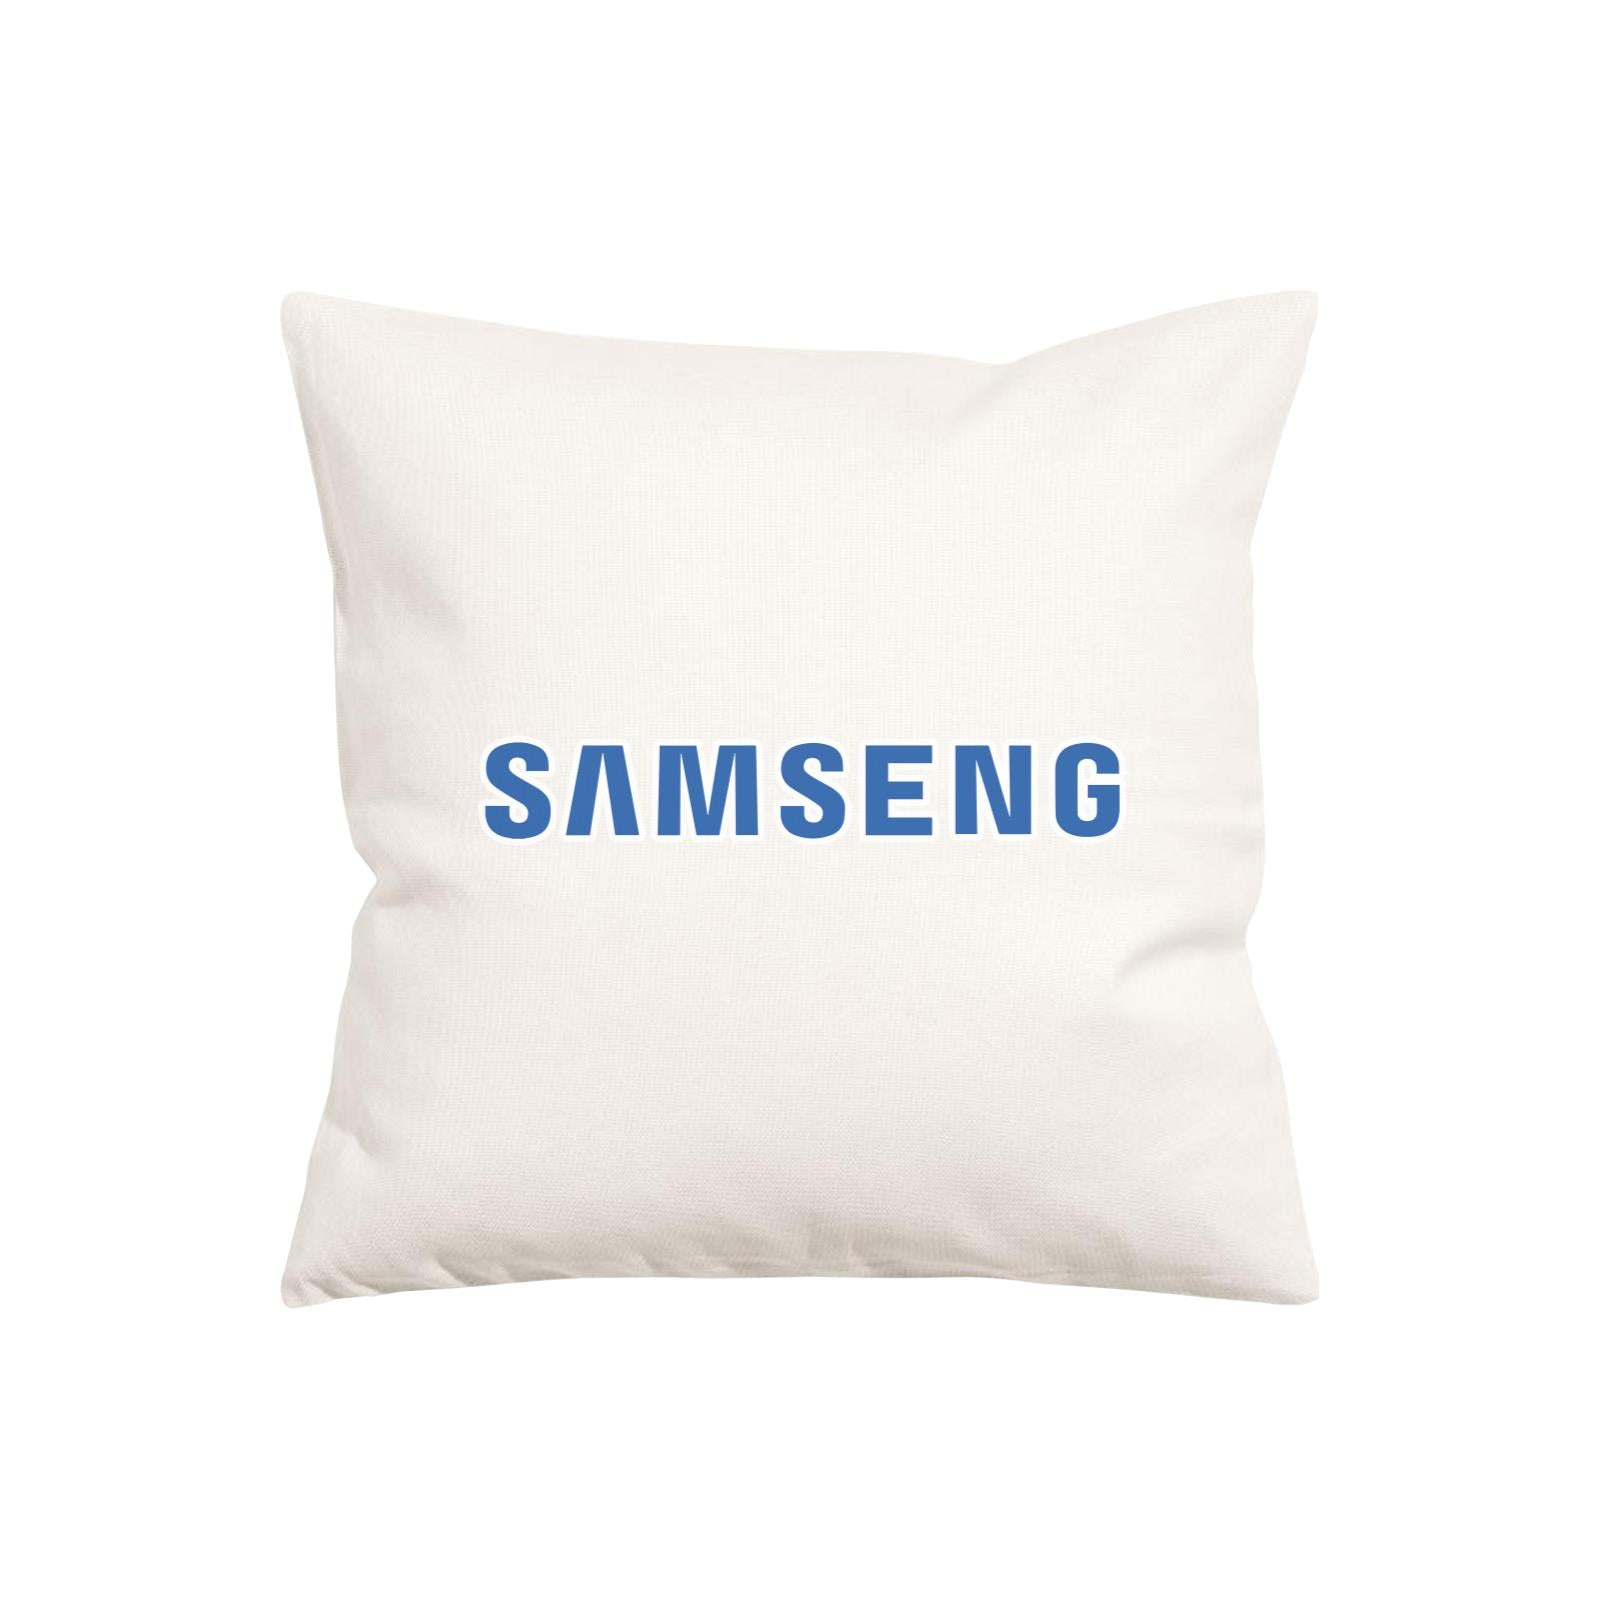 Slang Statement Samseng Pillow Cushion